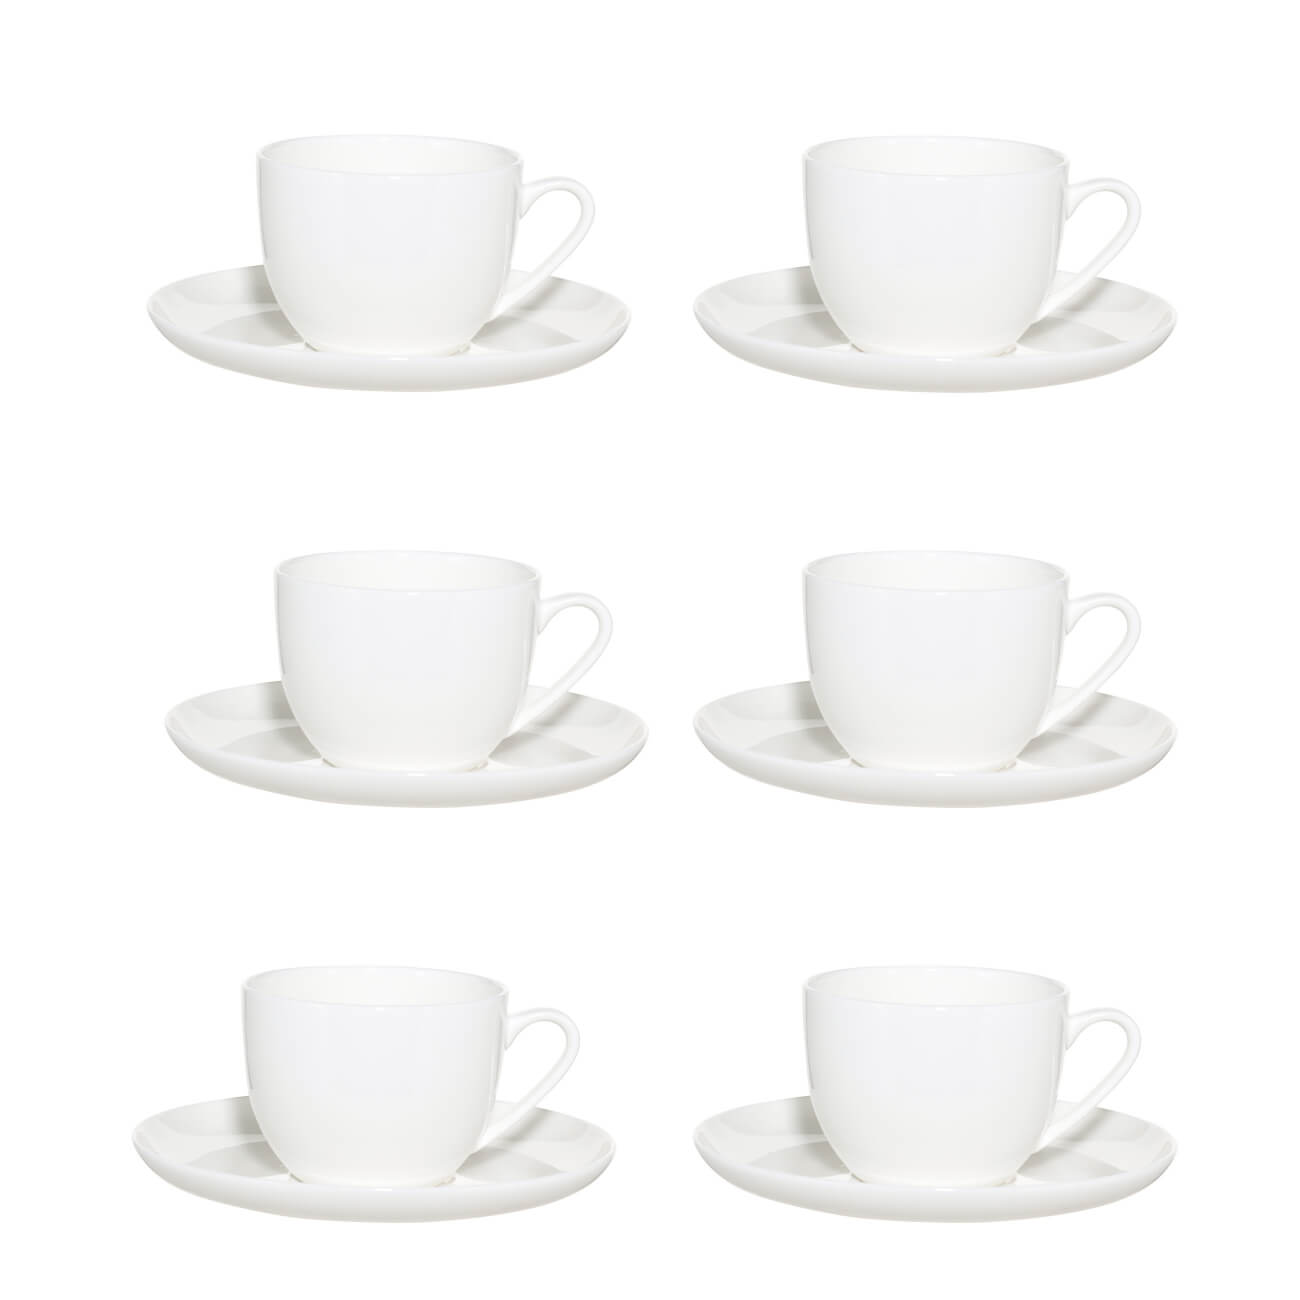 Пара чайная, 6 перс, 12 пр, 250 мл, фарфор F, белая, Ideal white ложка именная чайная с гравировкой